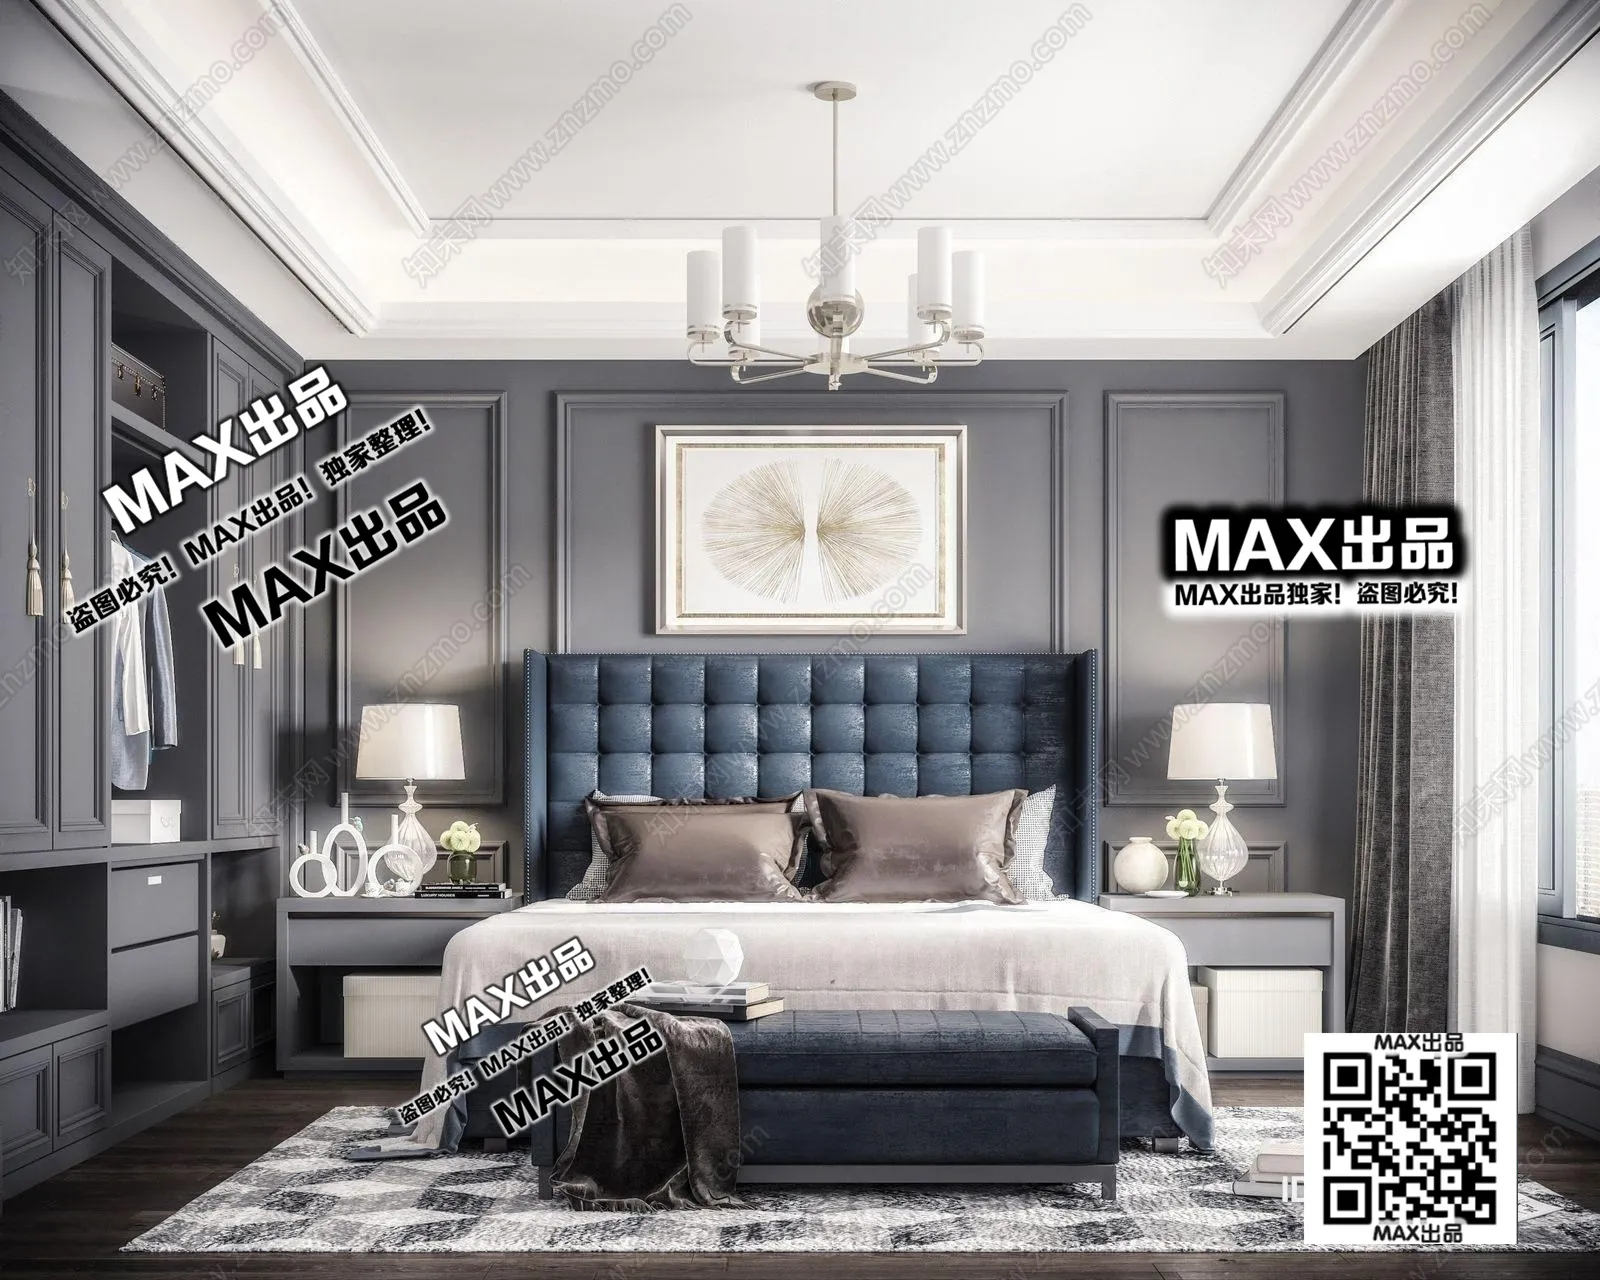 3DS MAX SCENES – LIVING ROOM – 048